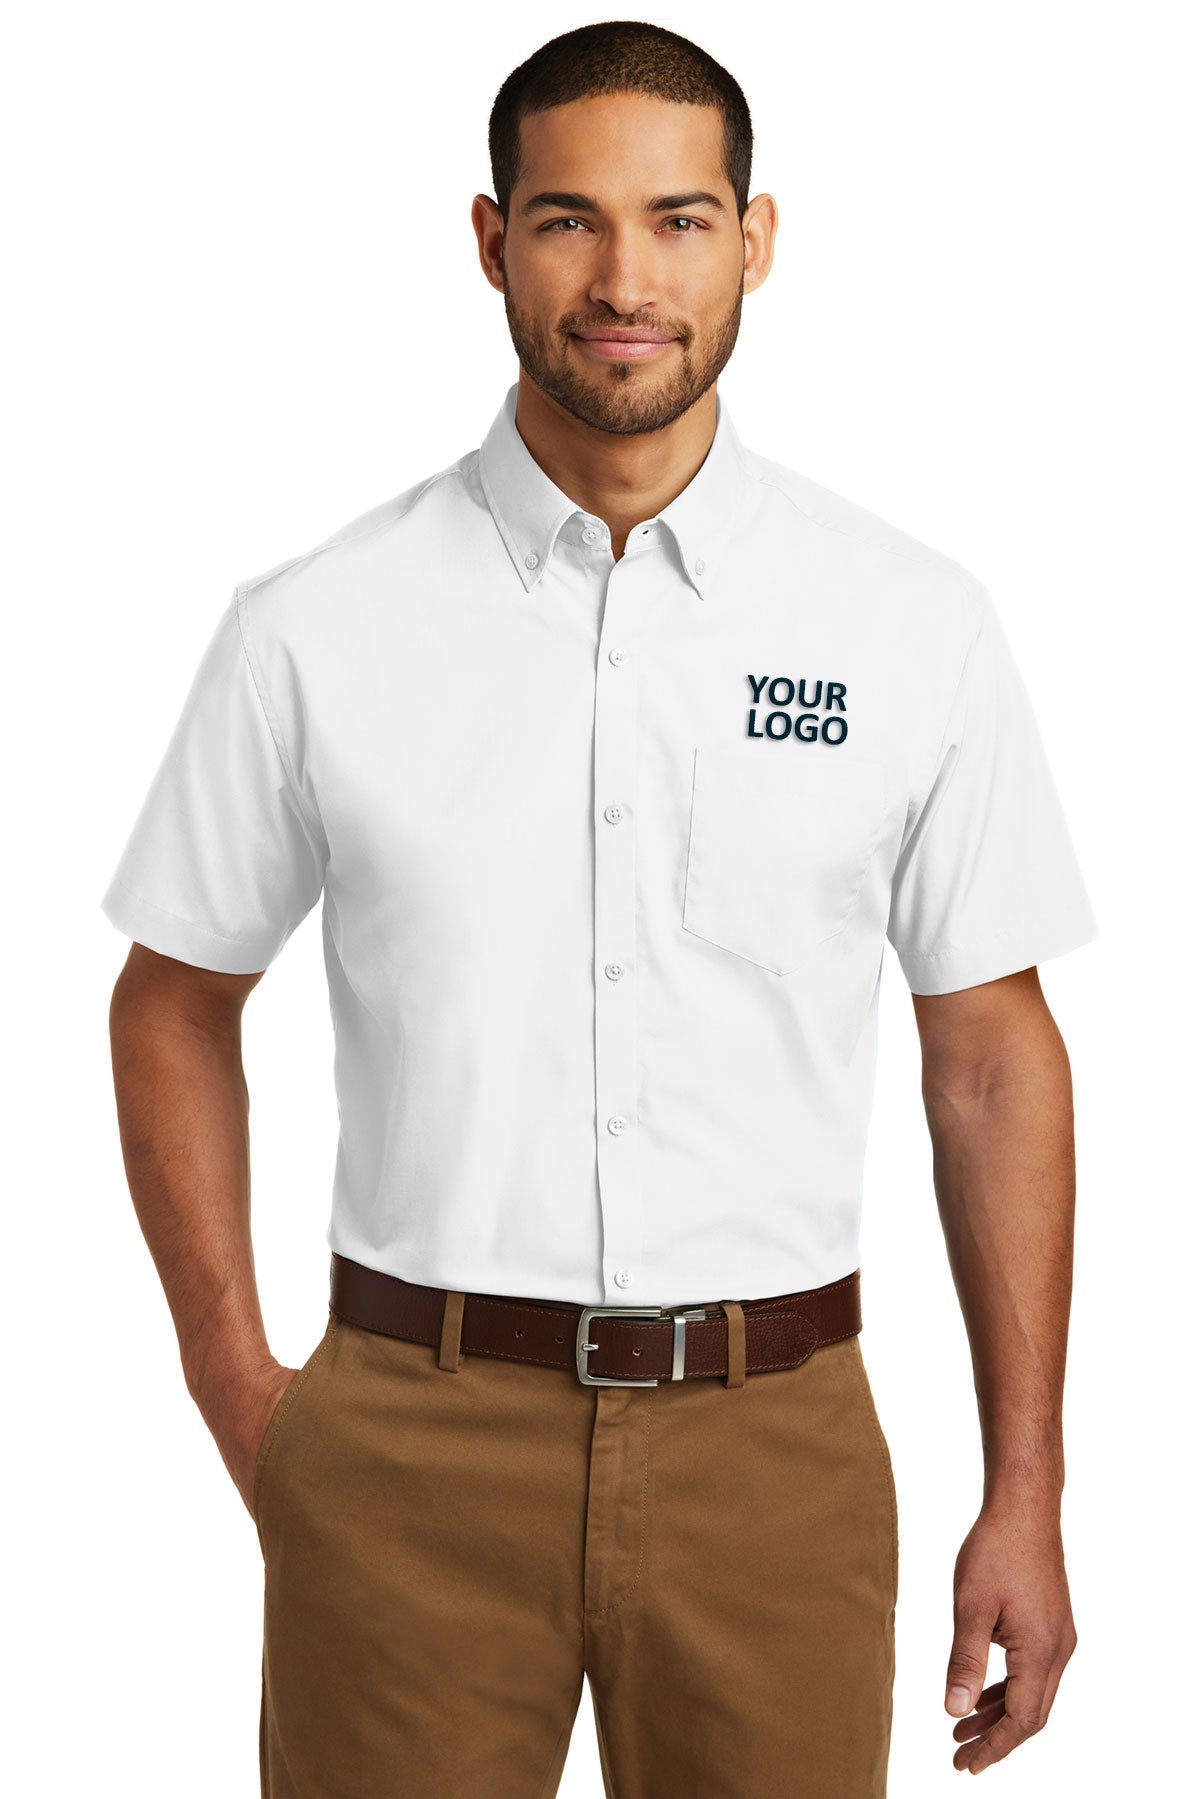 Port Authority White W101 custom logo shirts